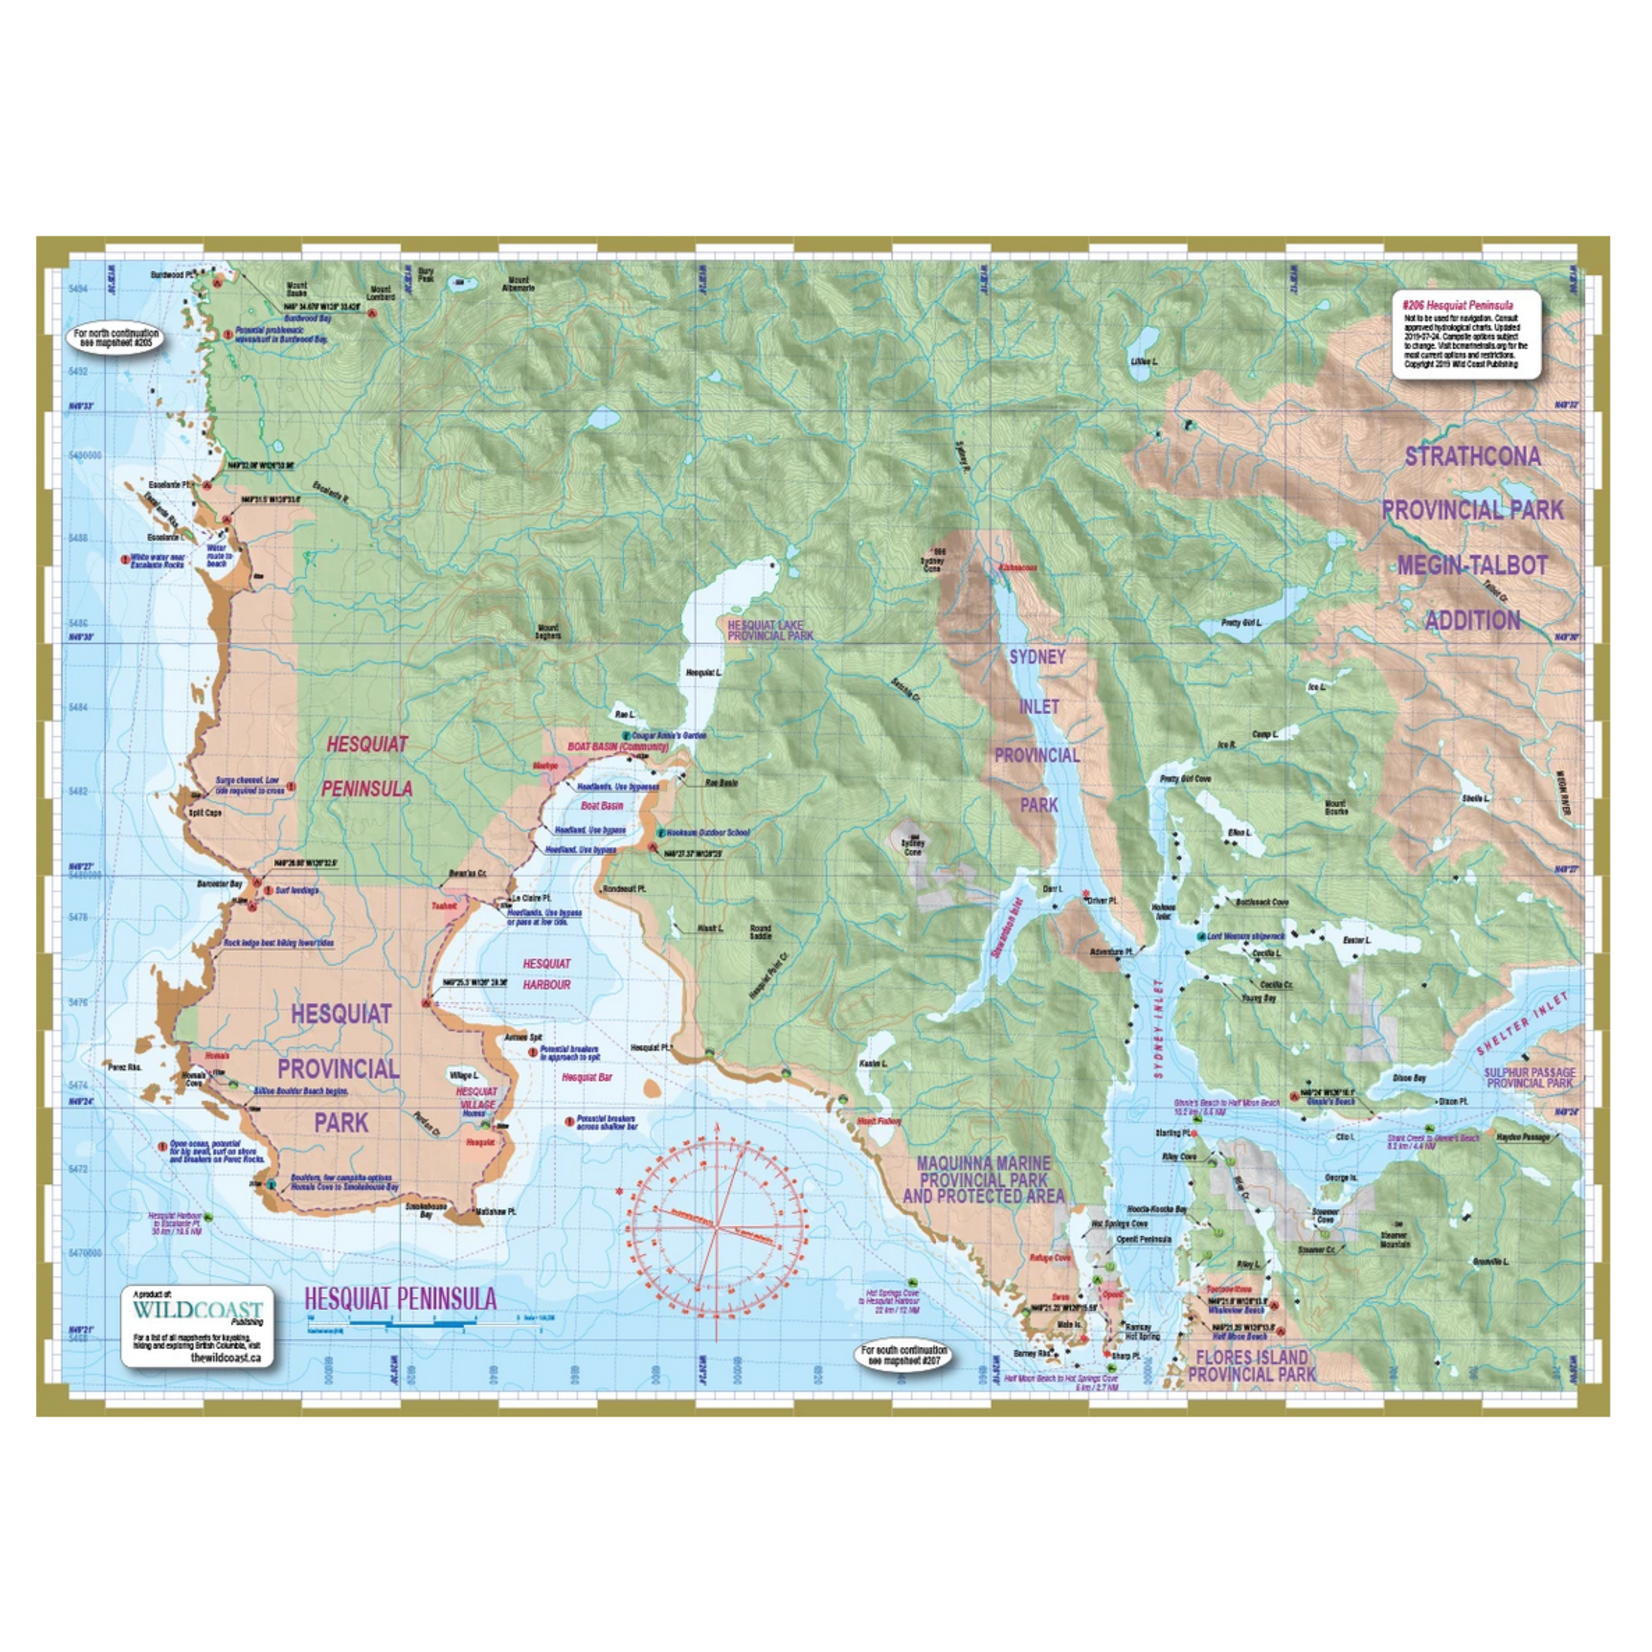 WildCoast - 206- Hesquiat peninsula